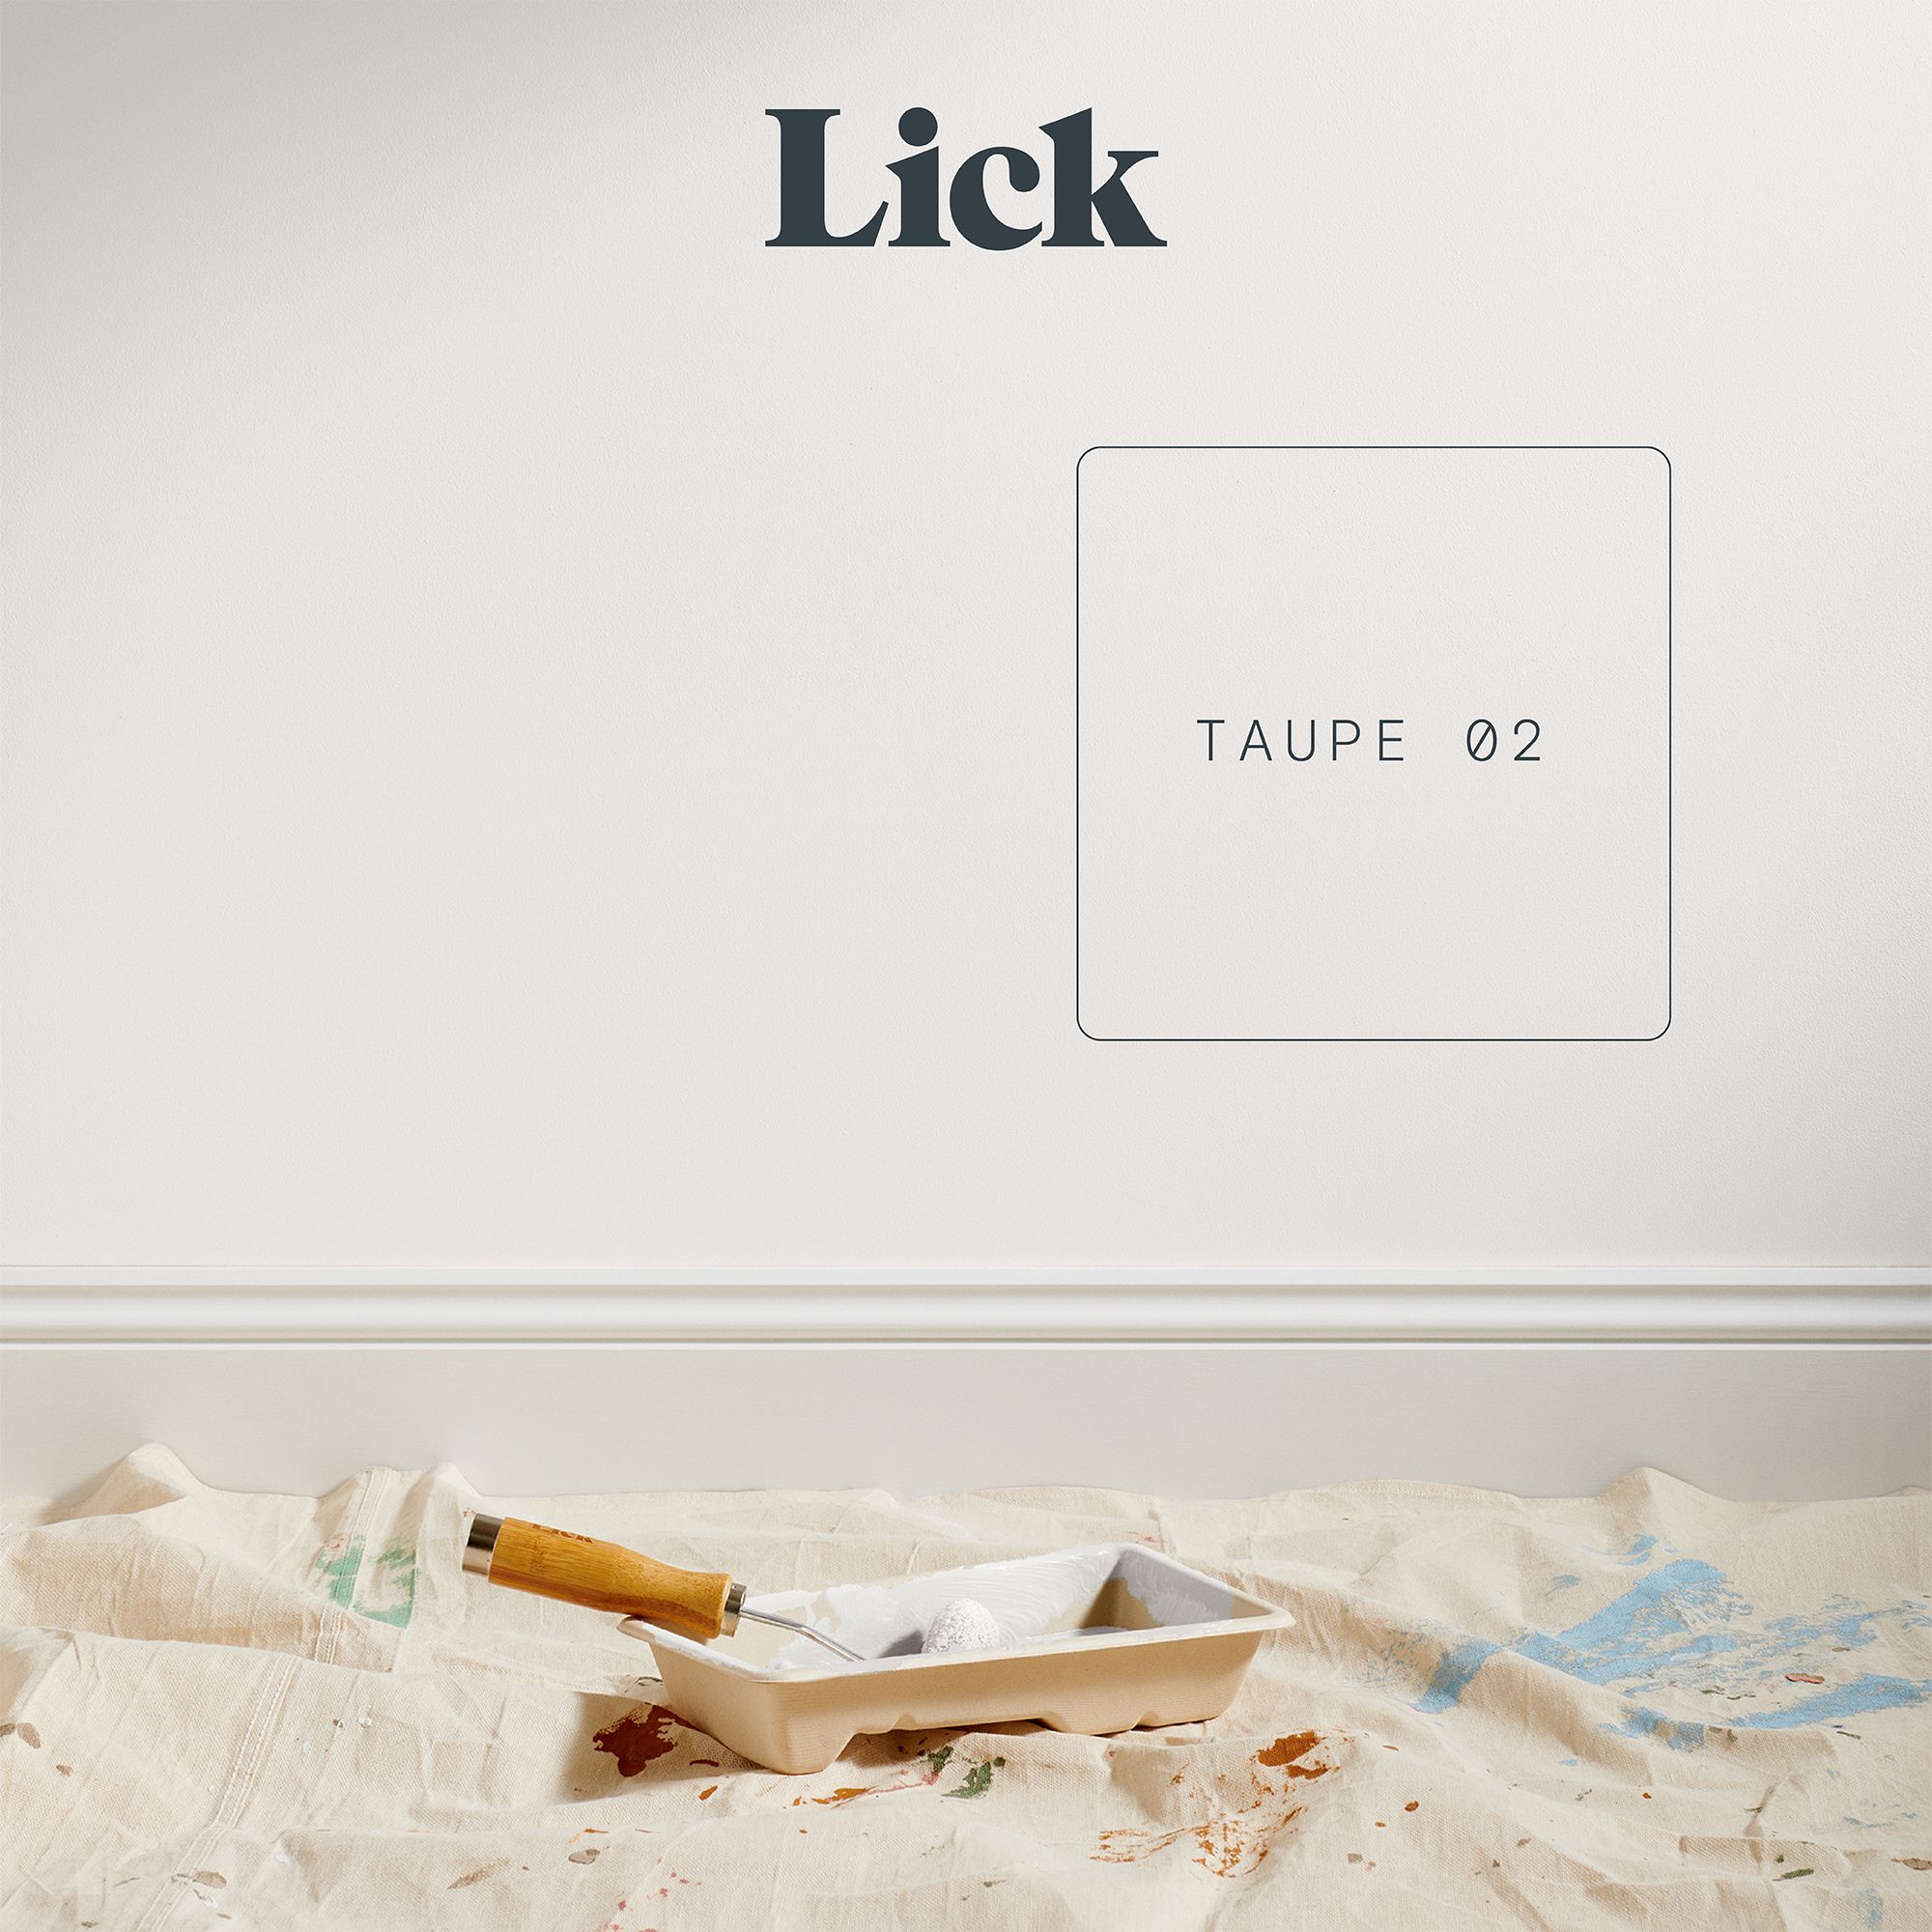 Lick Taupe 02 Peel & stick Tester